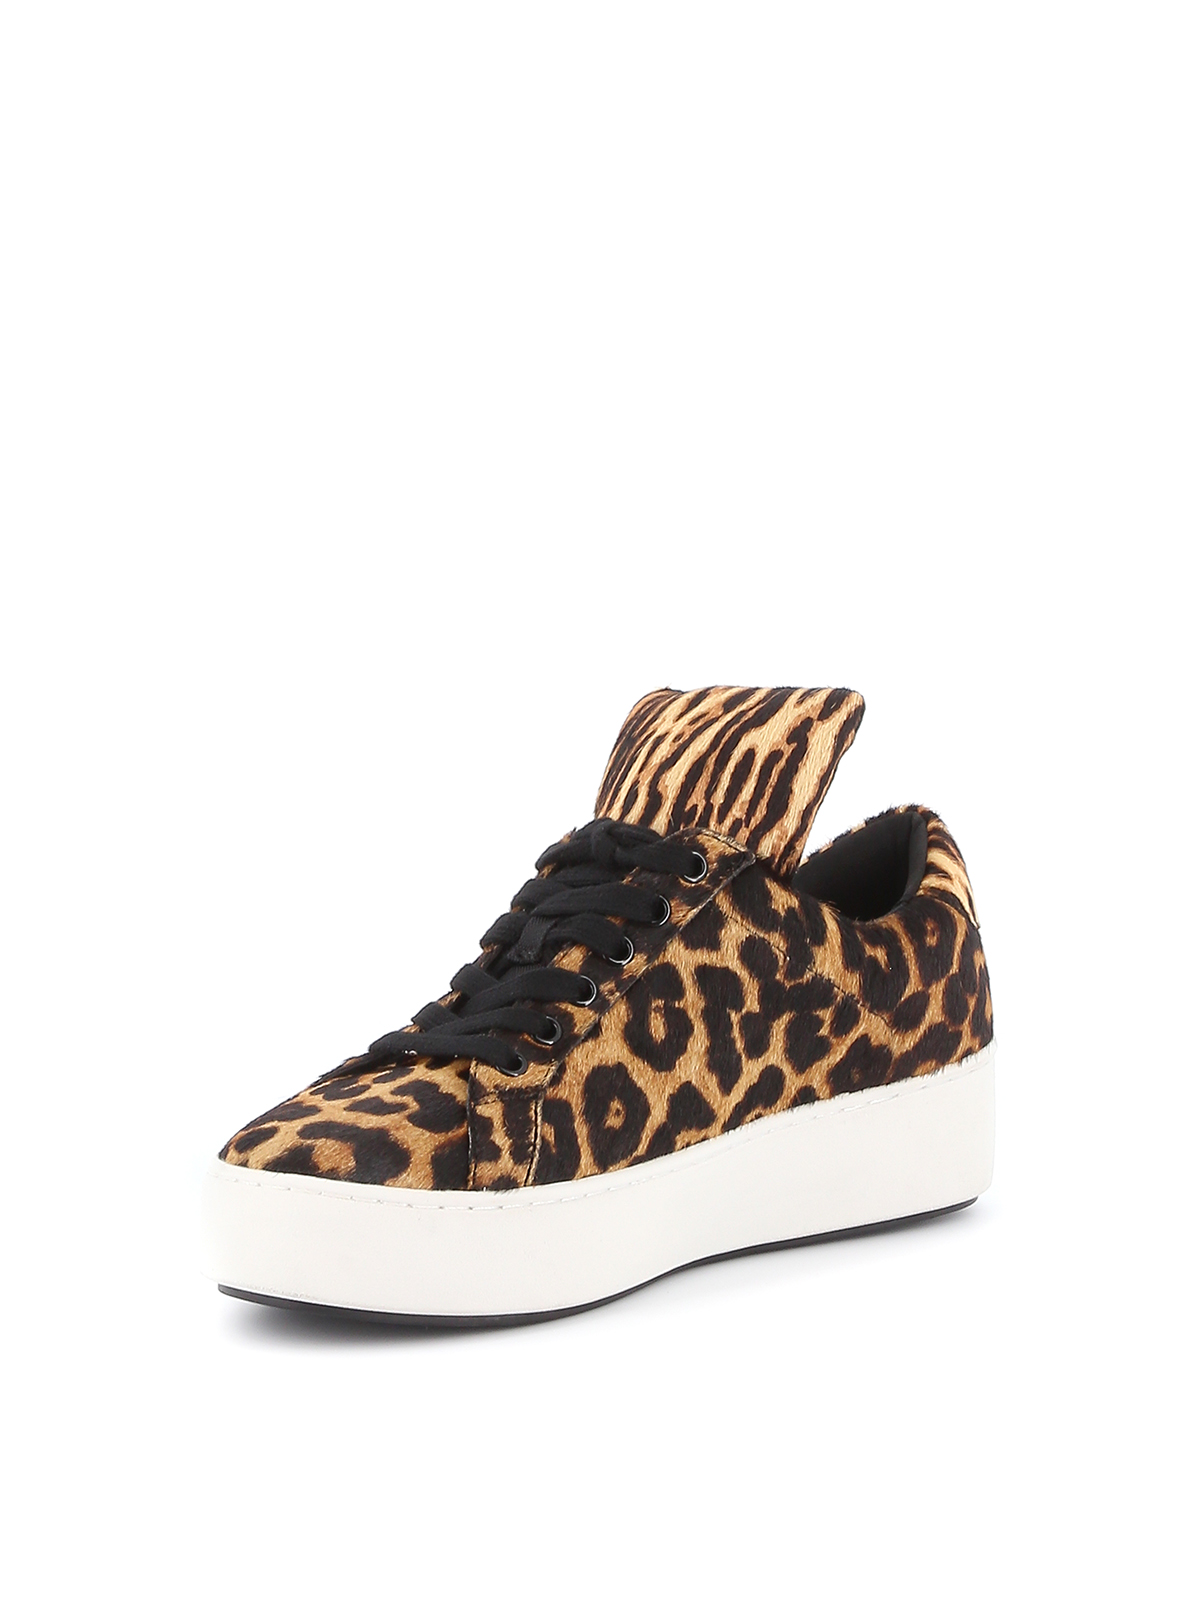 Trainers Michael Kors - Mindy leopard print calf hair sneakers -  43F9MNFS1H226